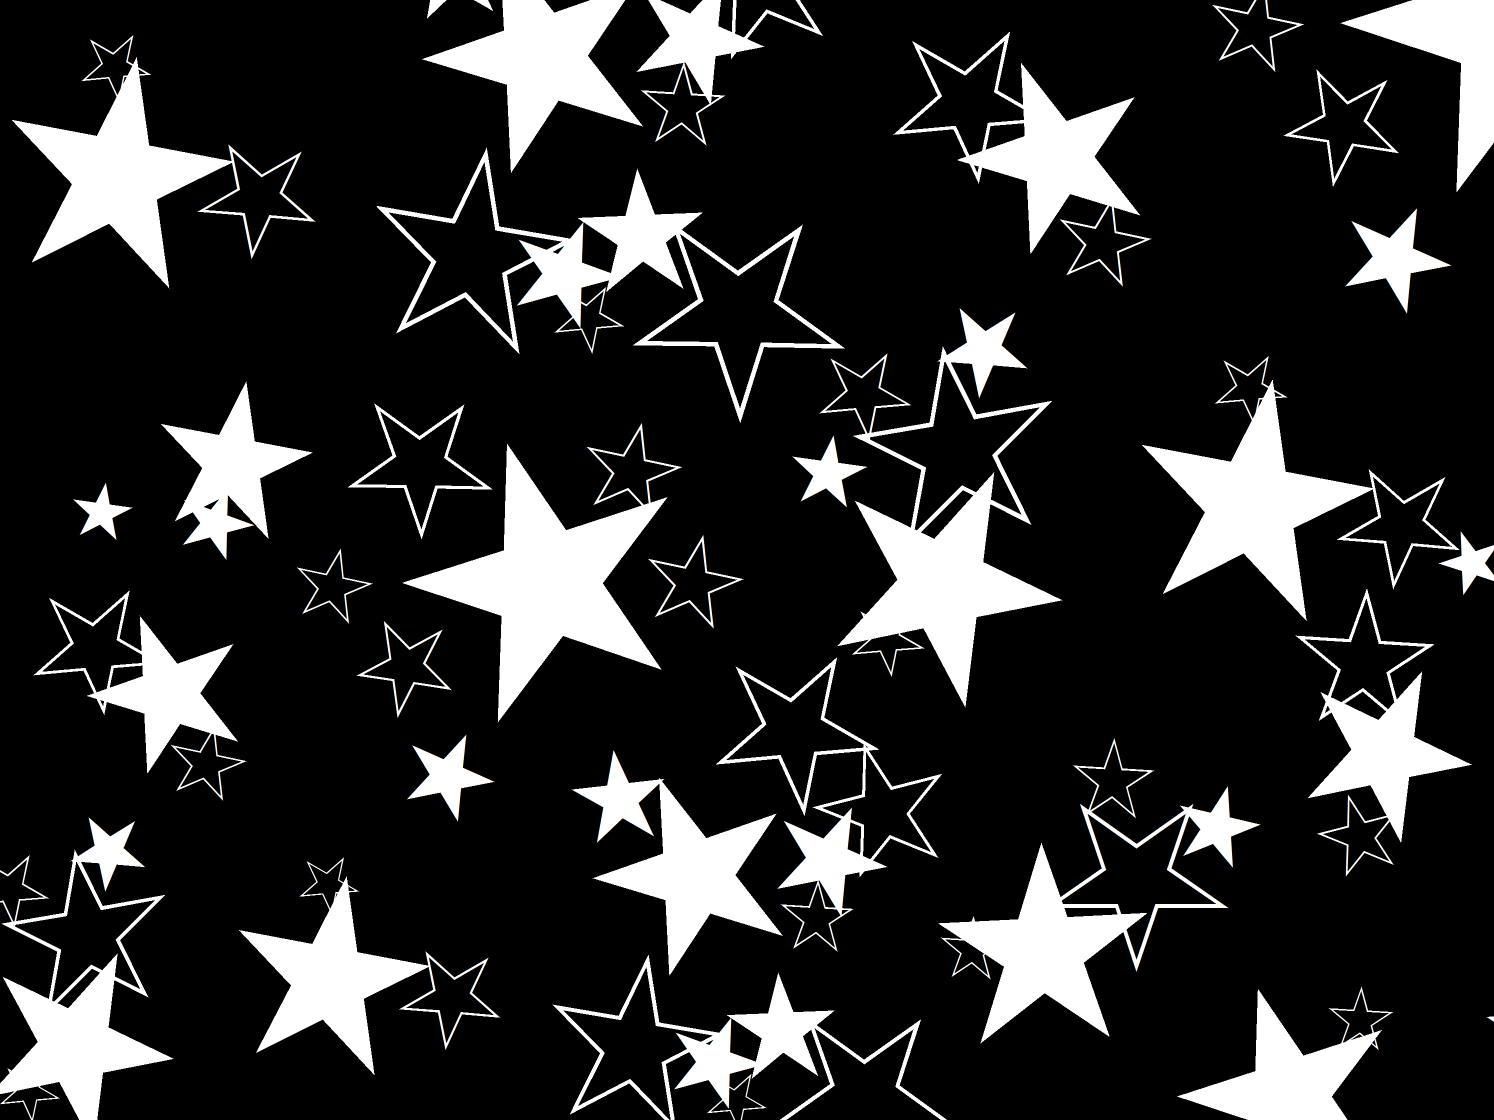 Random. Star wallpaper, Star background, Cute wallpaper